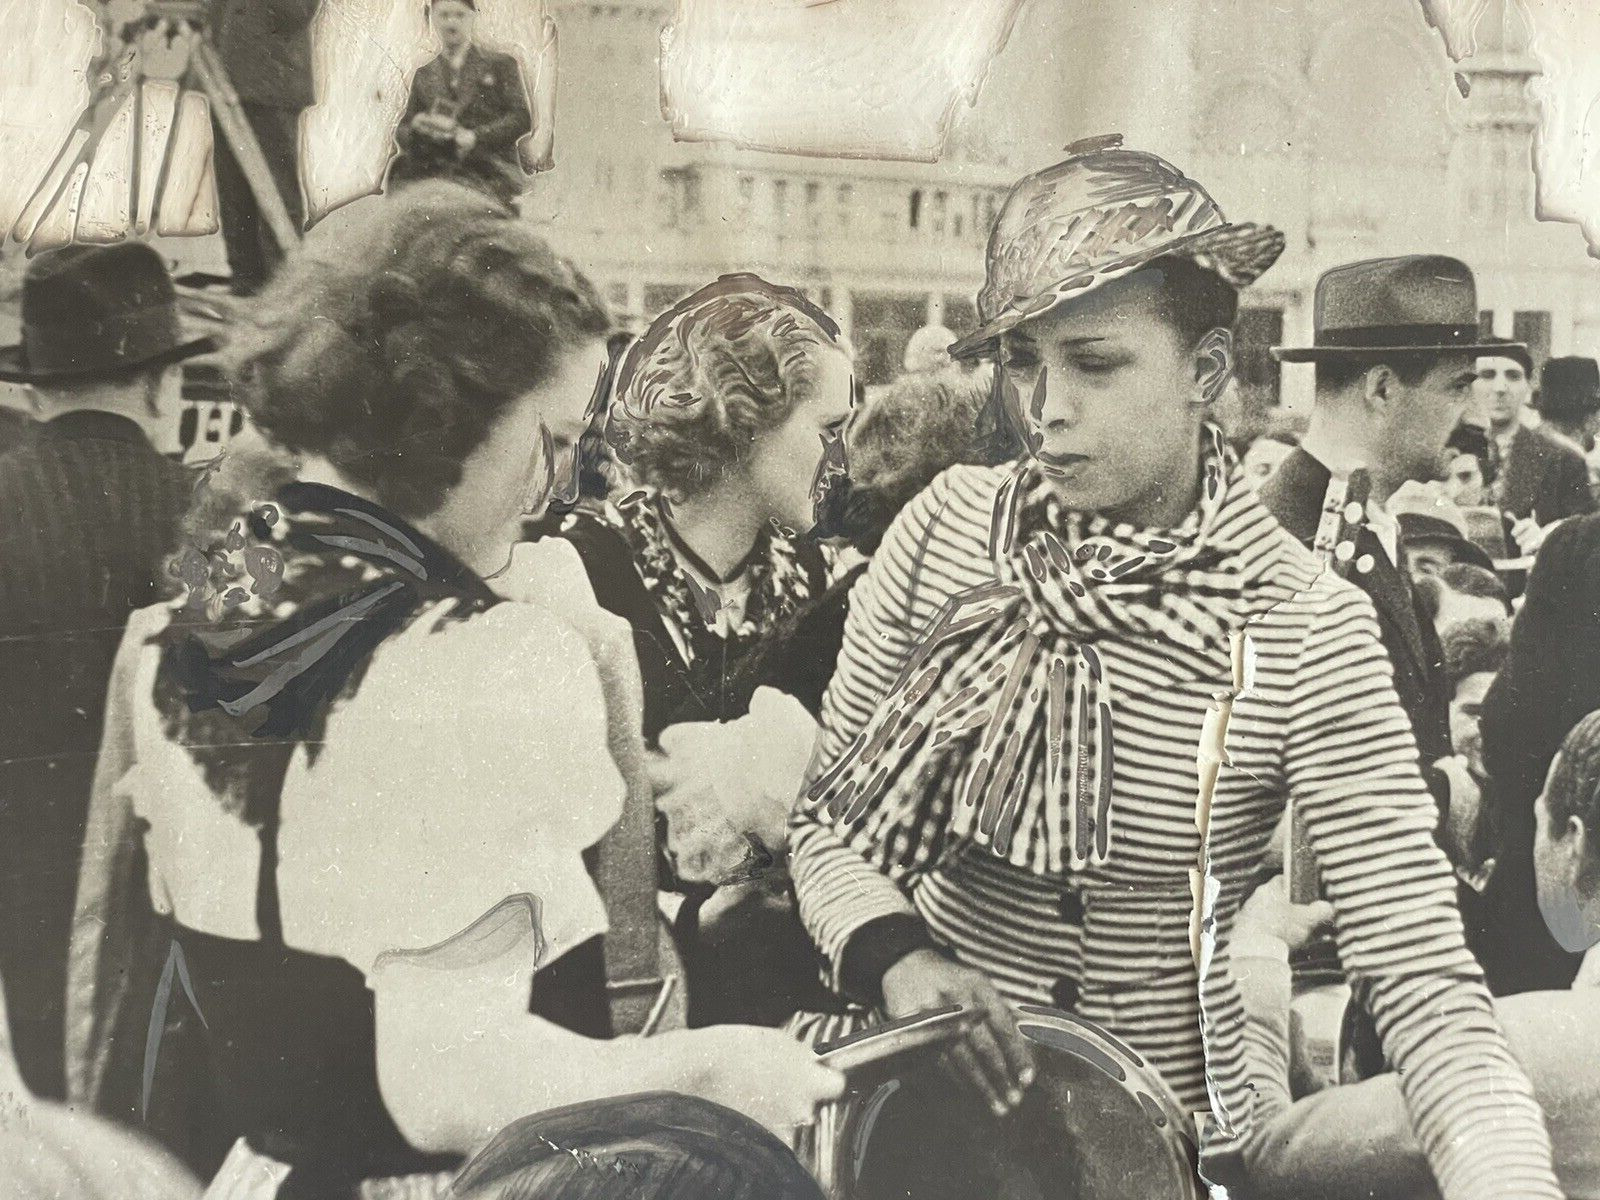 Josephine Baker in Paris Civil Rights 1939 #historyinpieces